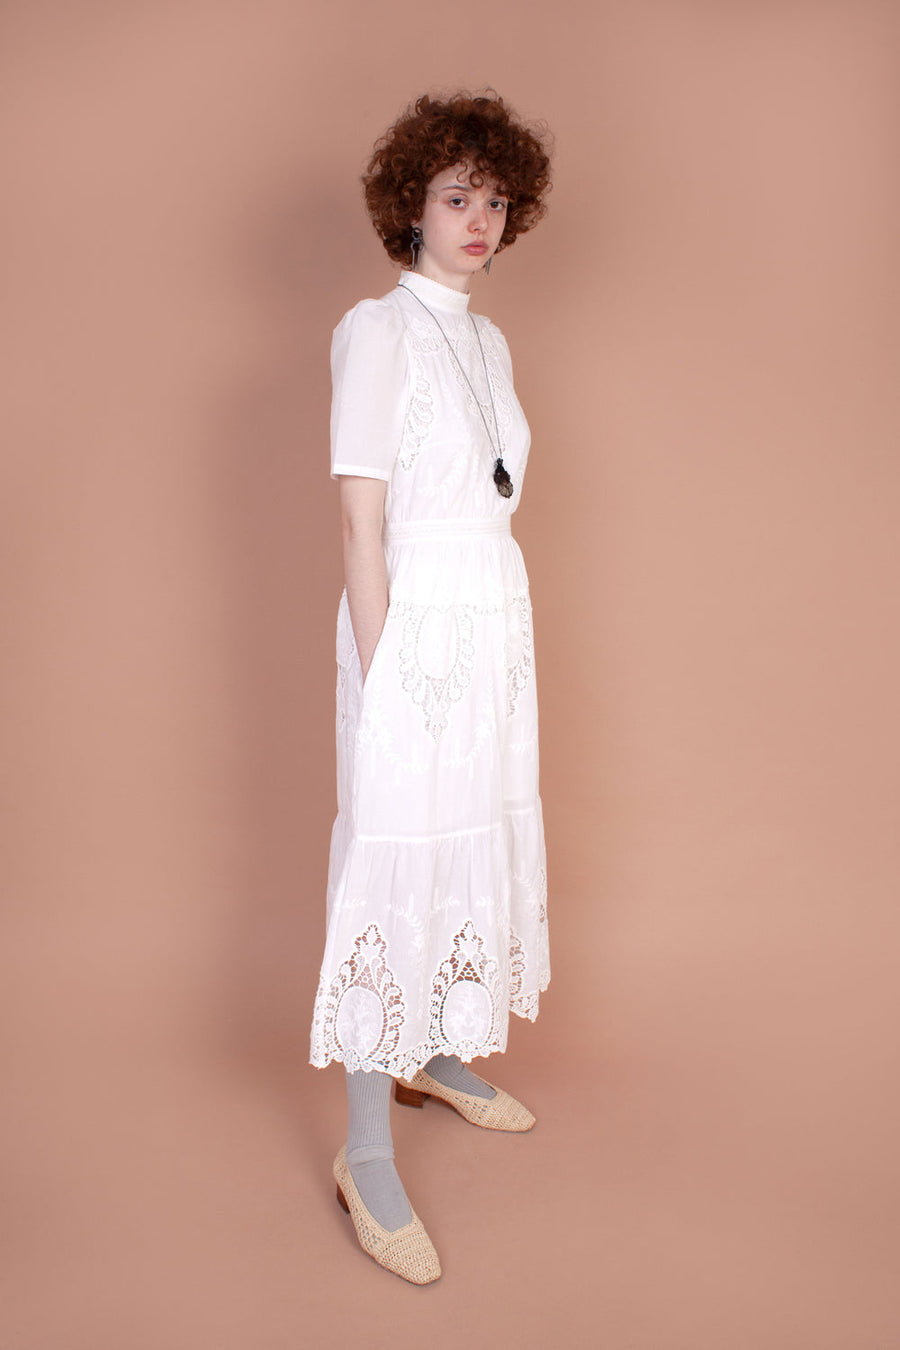 Lovage Dress White